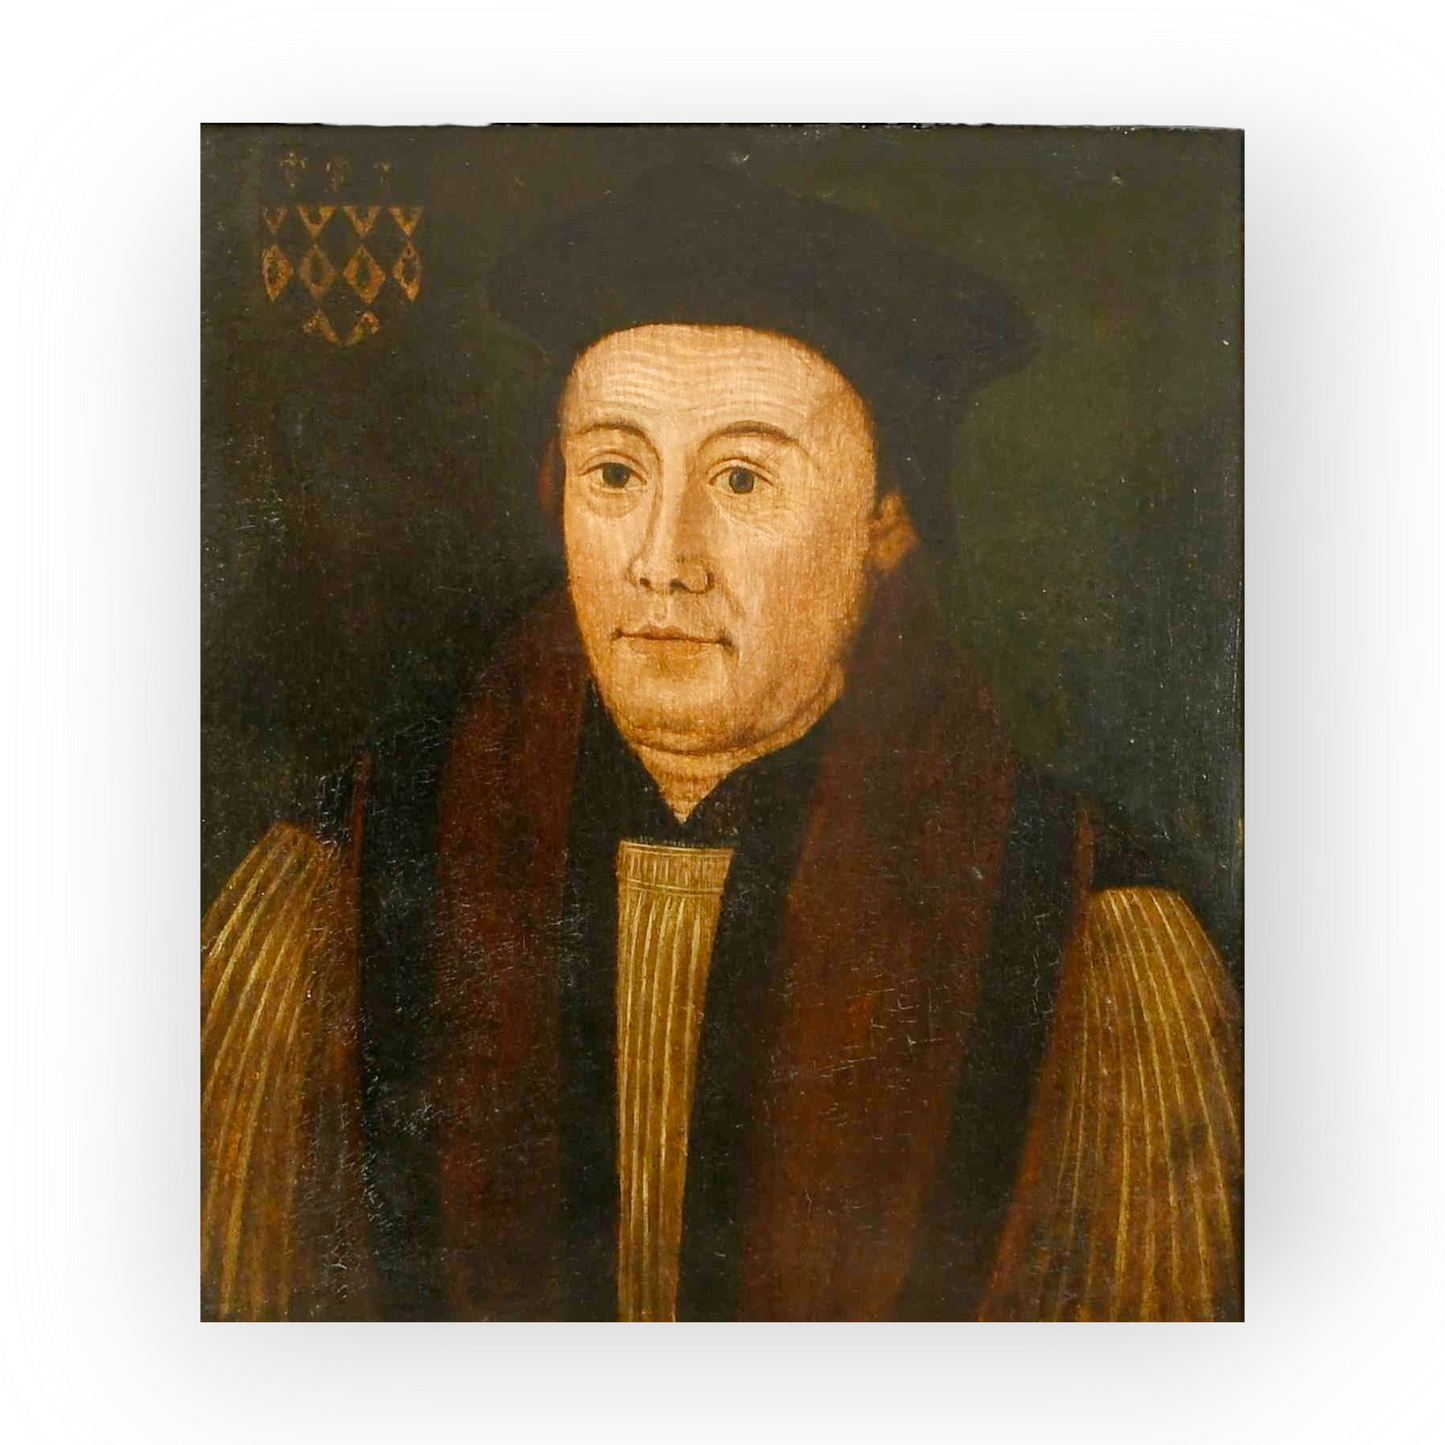 16th Century English School Antique Oil on Wood Panel Portrait of William Waynflete (B.1398 - D.1486)